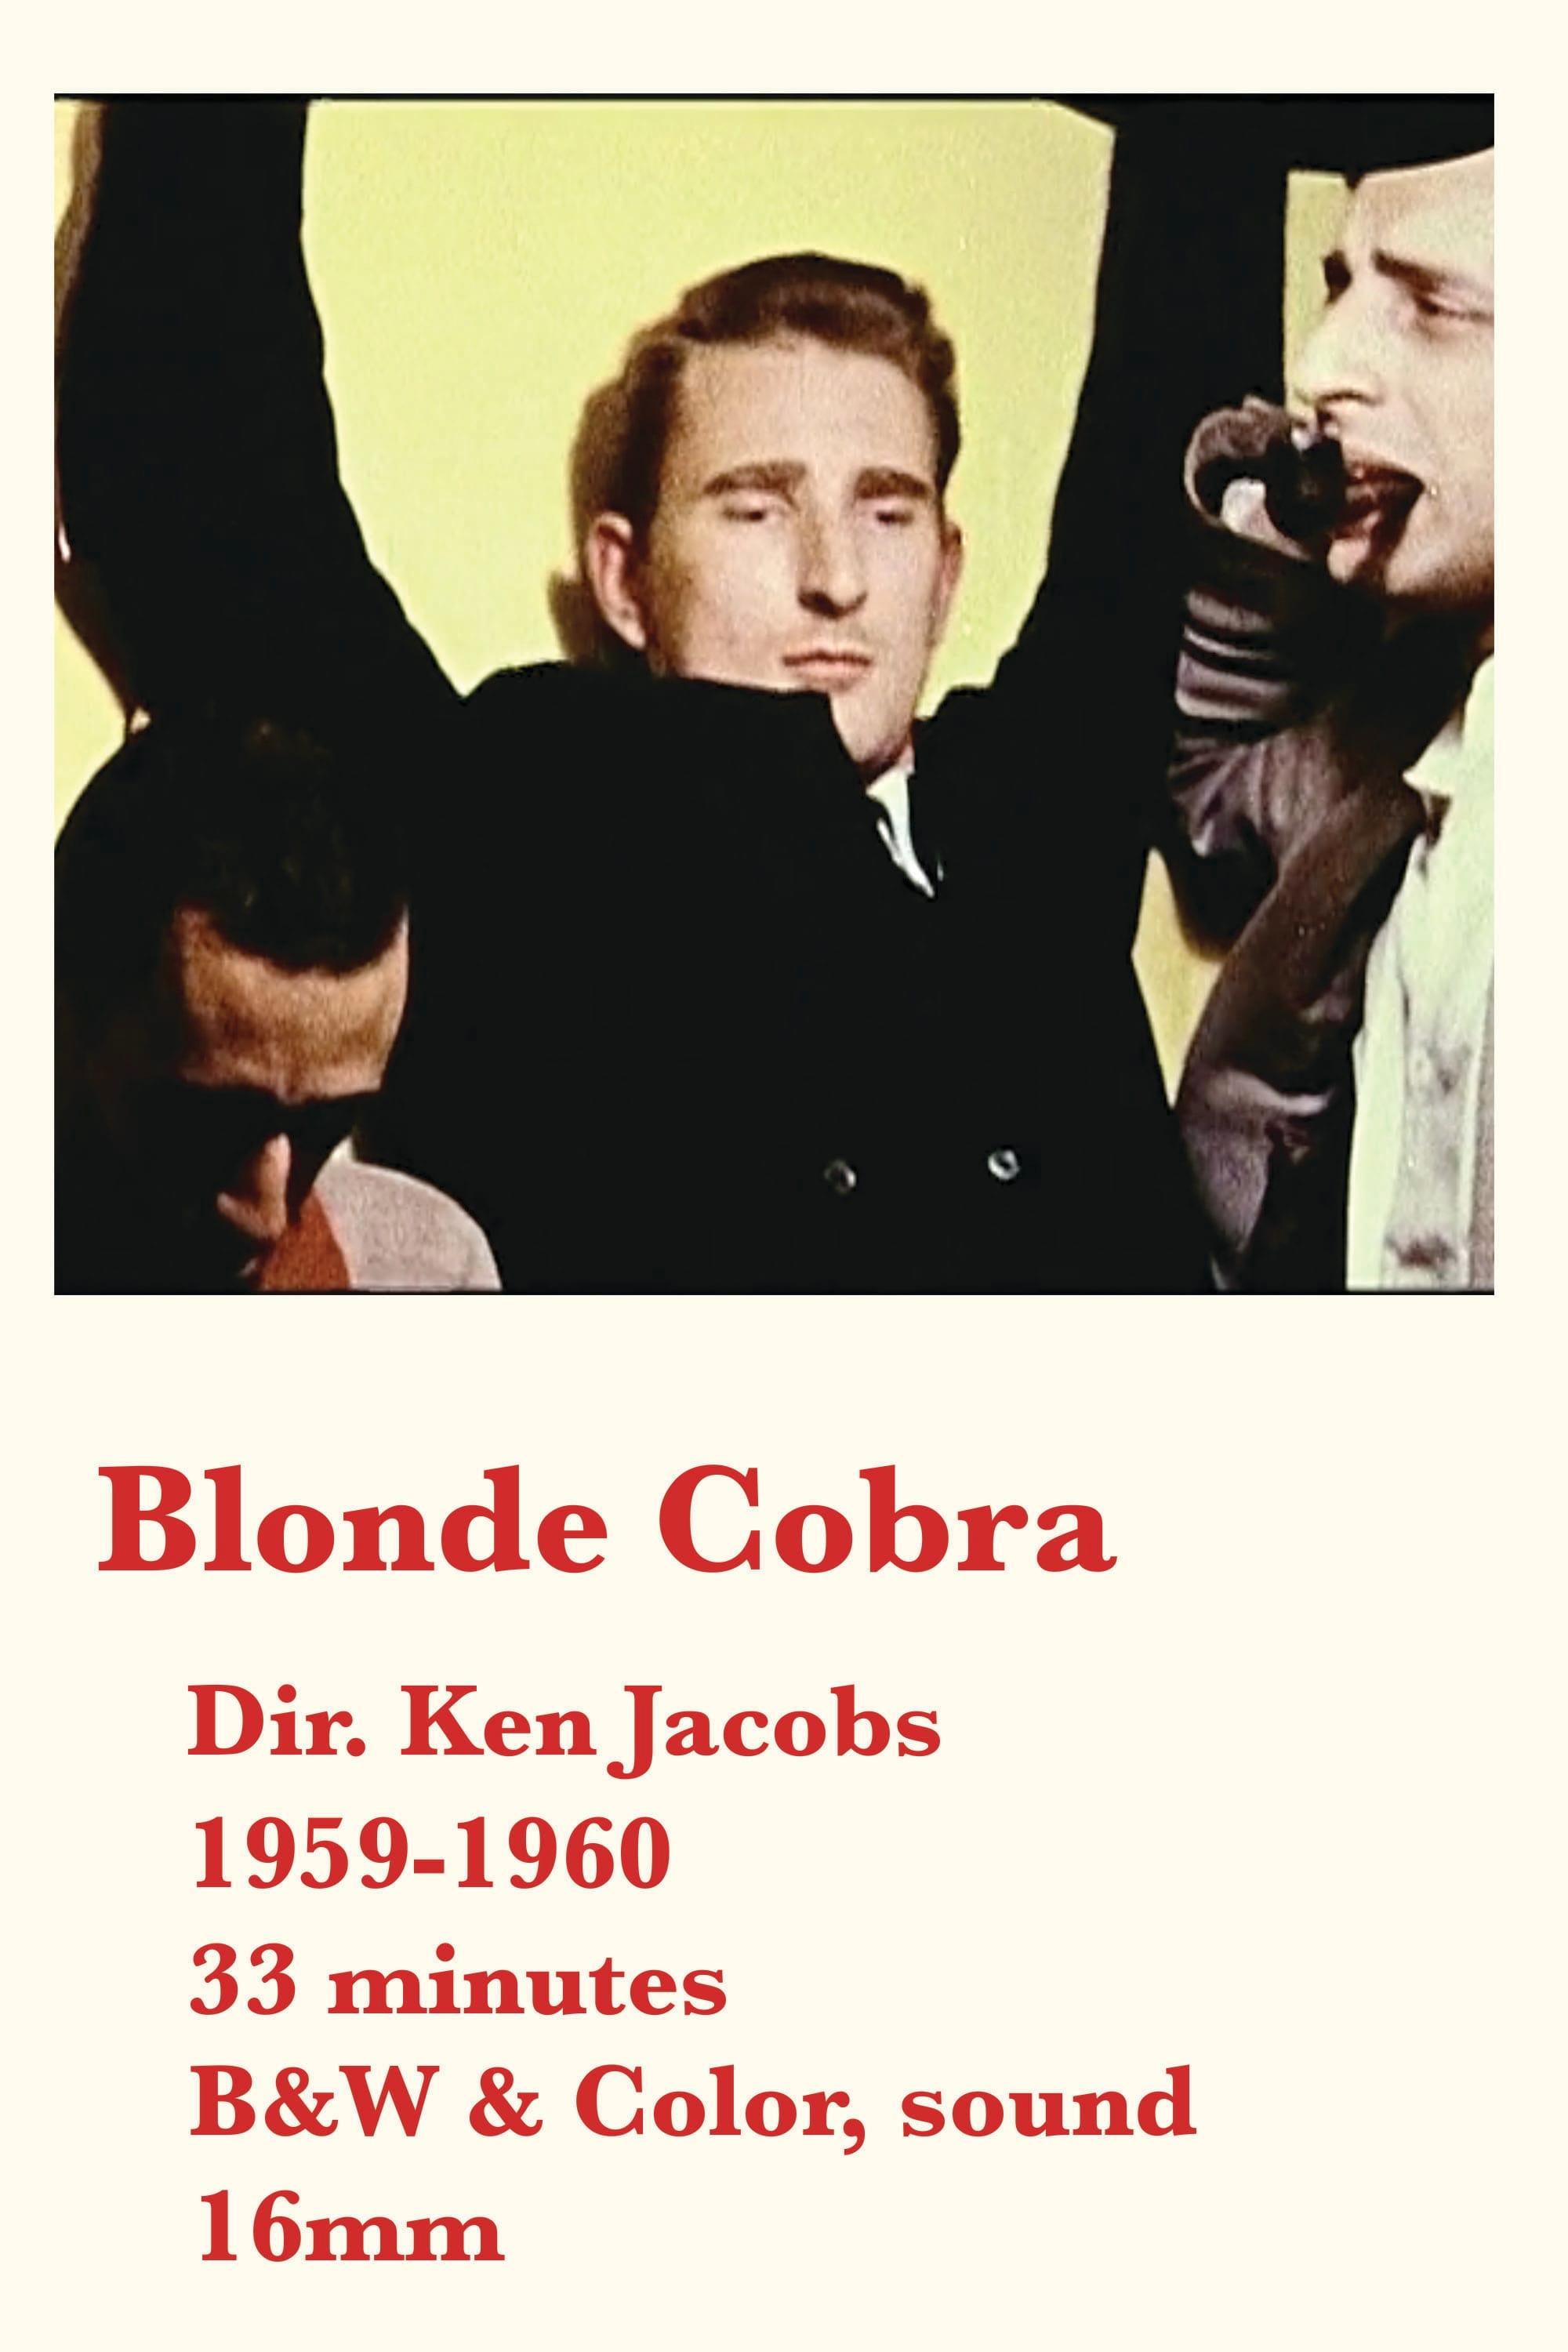 Blonde Cobra poster